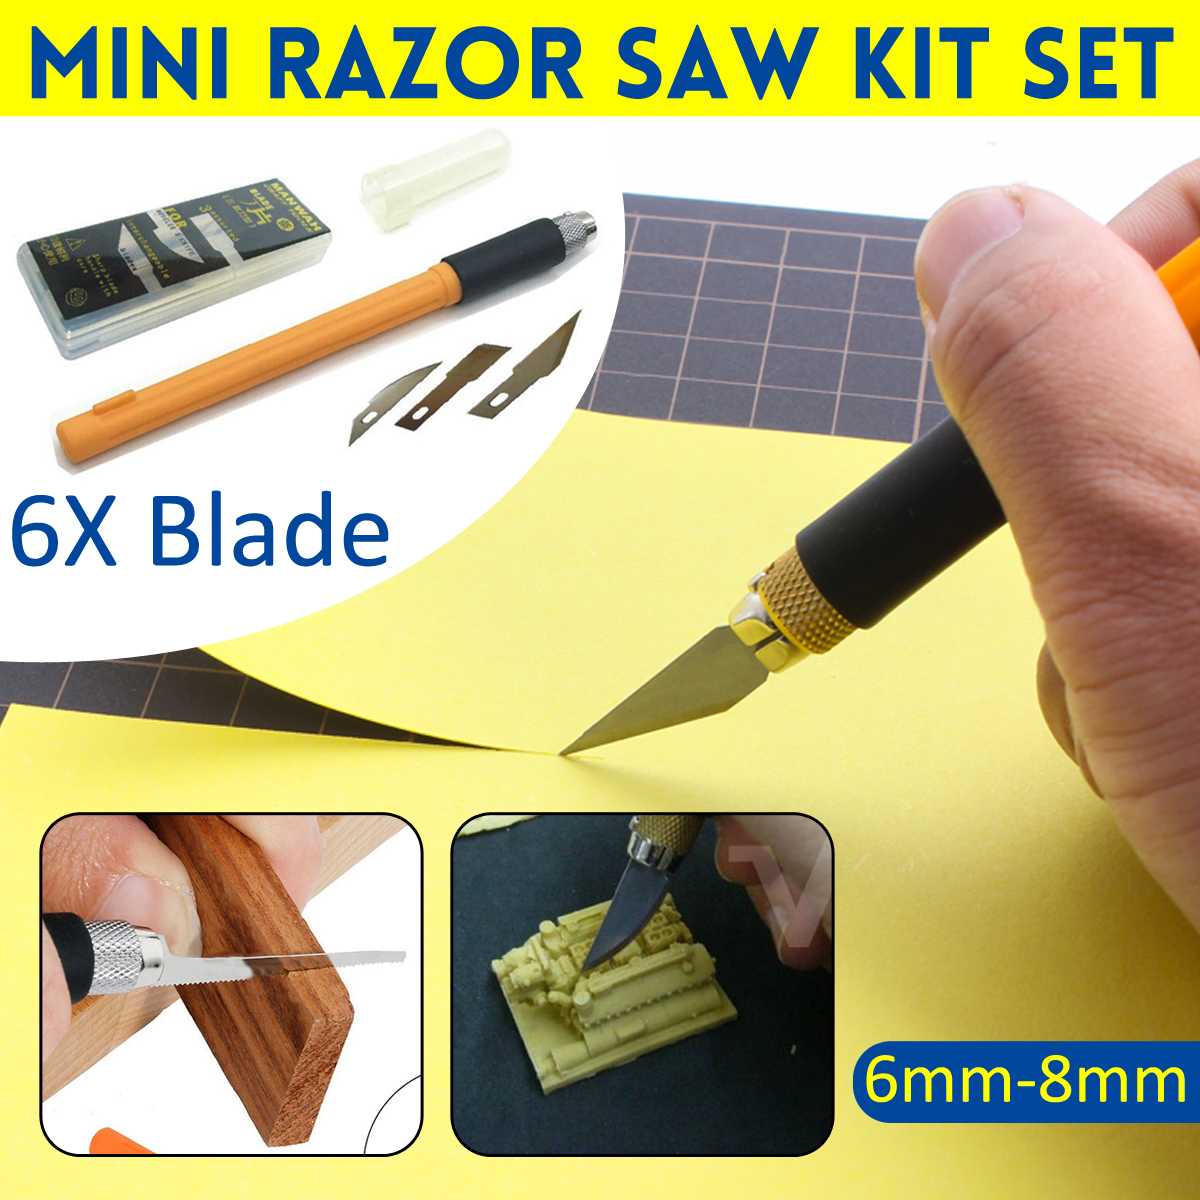 Mini Hobby Razor Saw Kit DIY Handy Multifunction Craft Blade Model Making Woodworking Handcraft Tools With 6 Blades